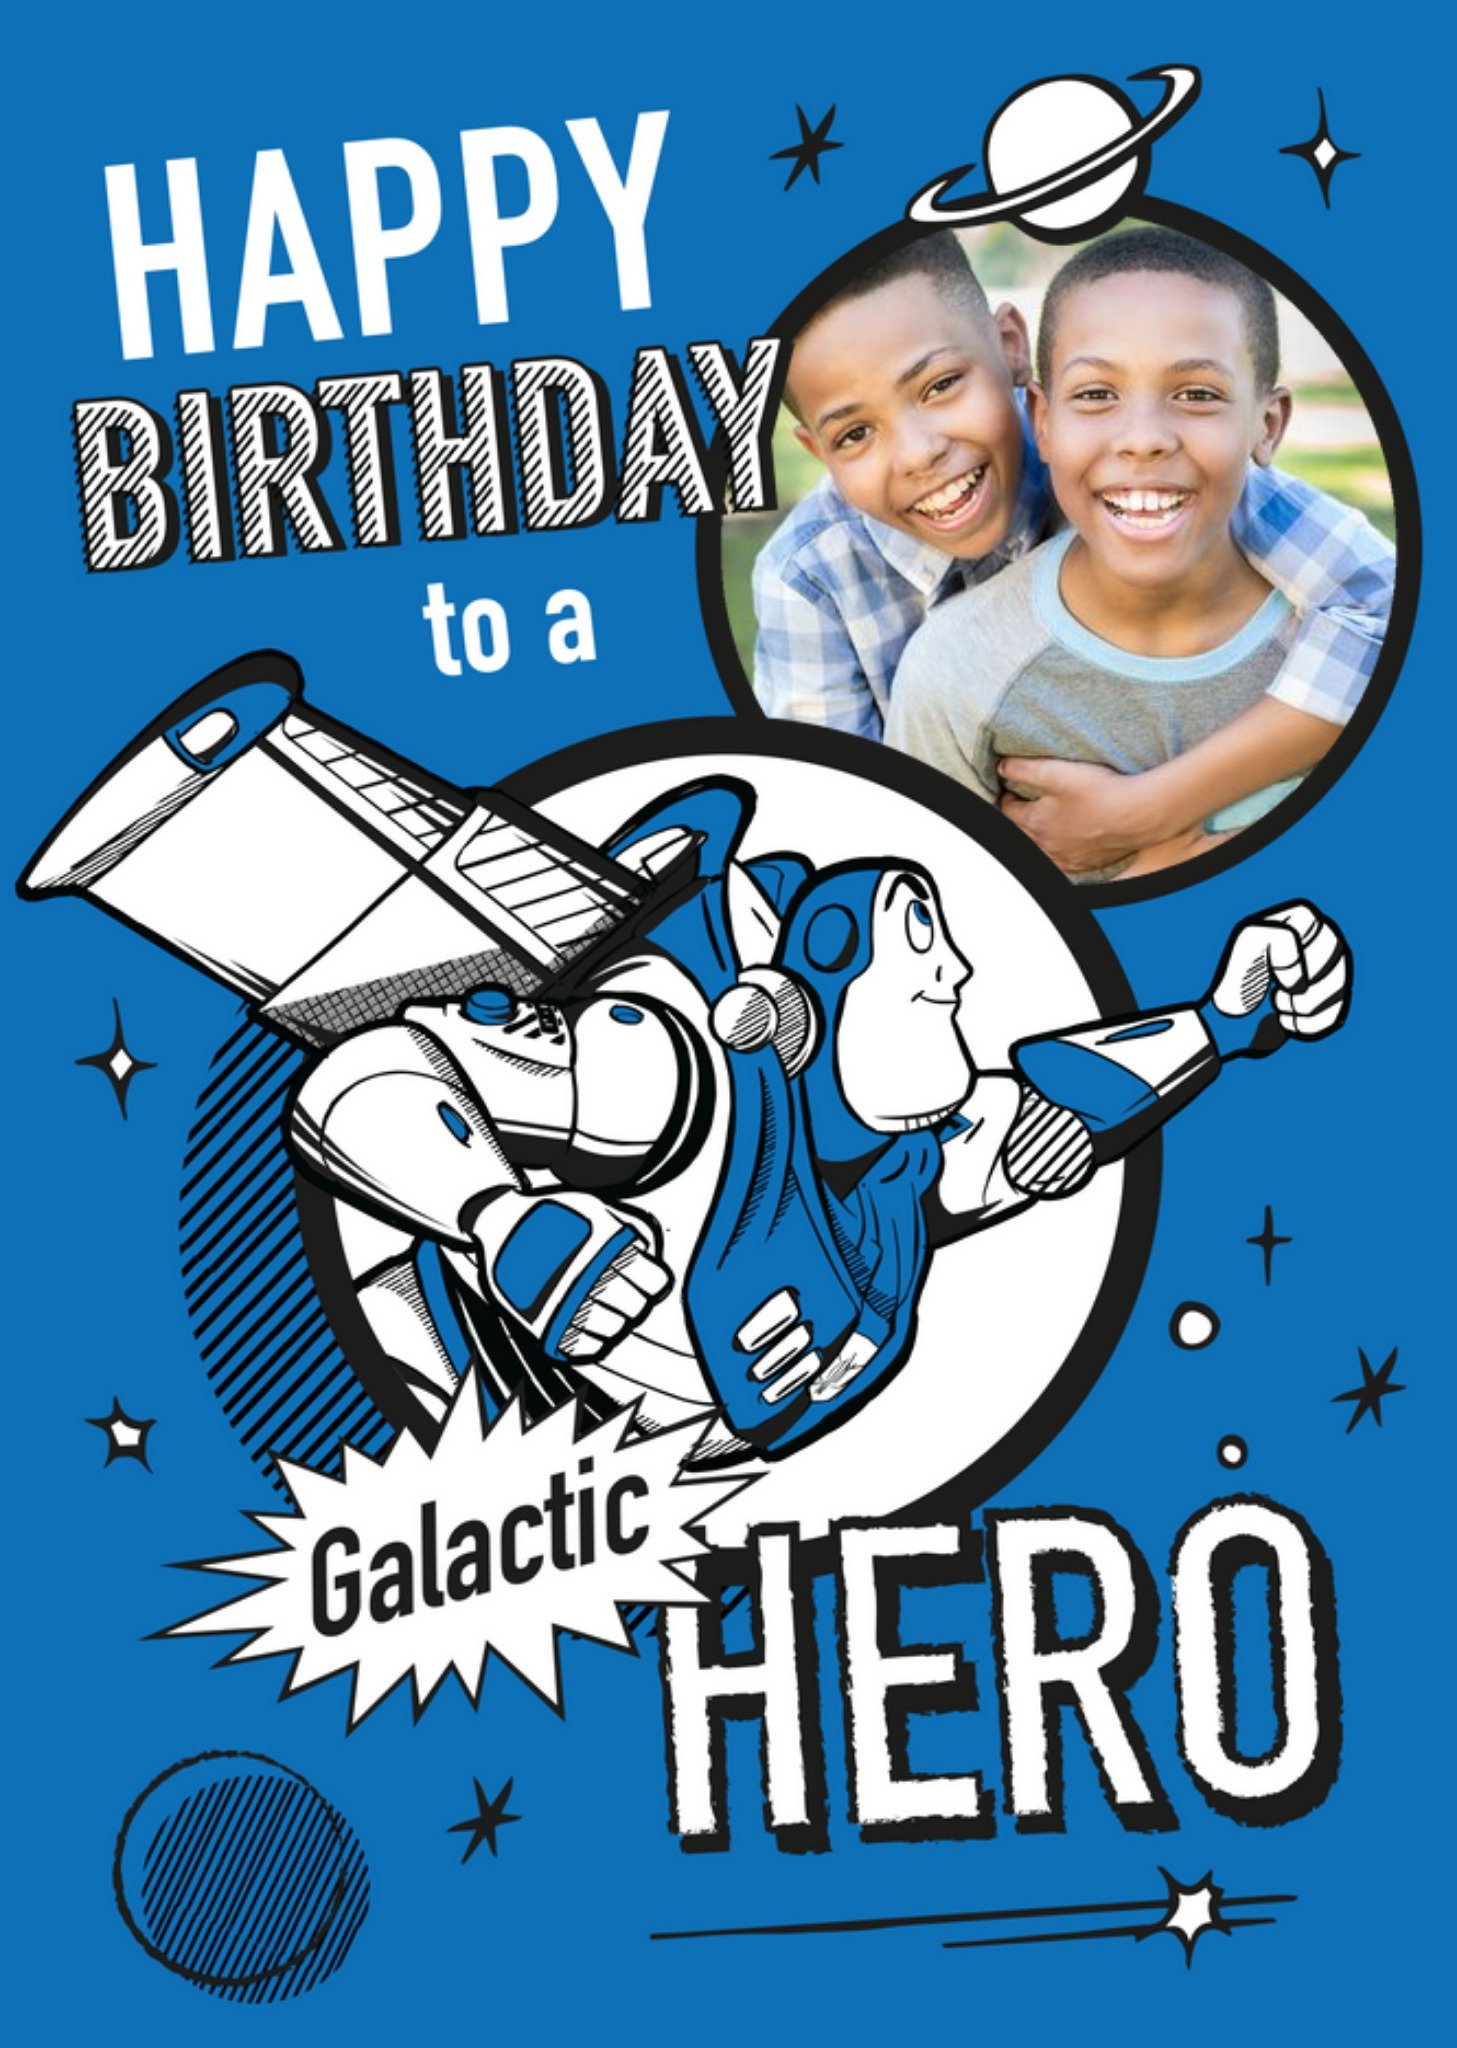 Toy Story Buzz Lightyear Galactic Hero Photo Upload Birthday Card, Large